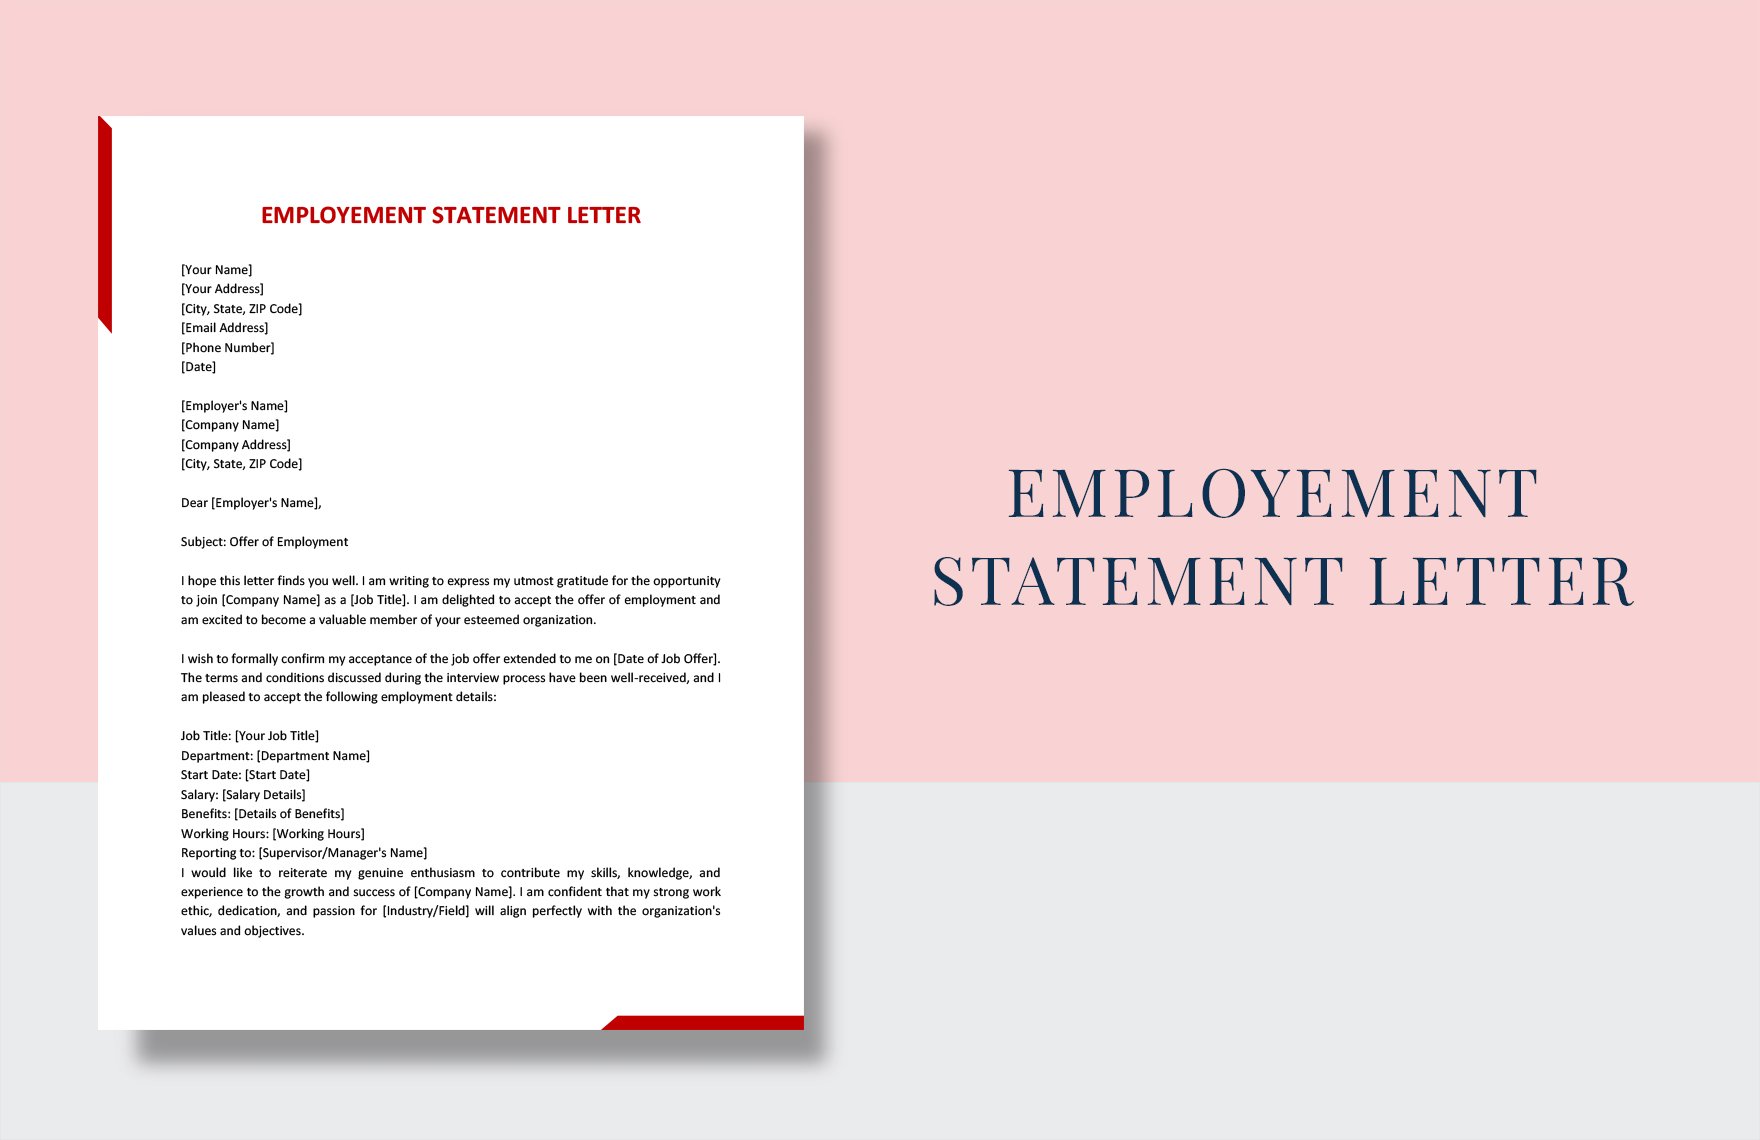 Free Employment Statement Letter